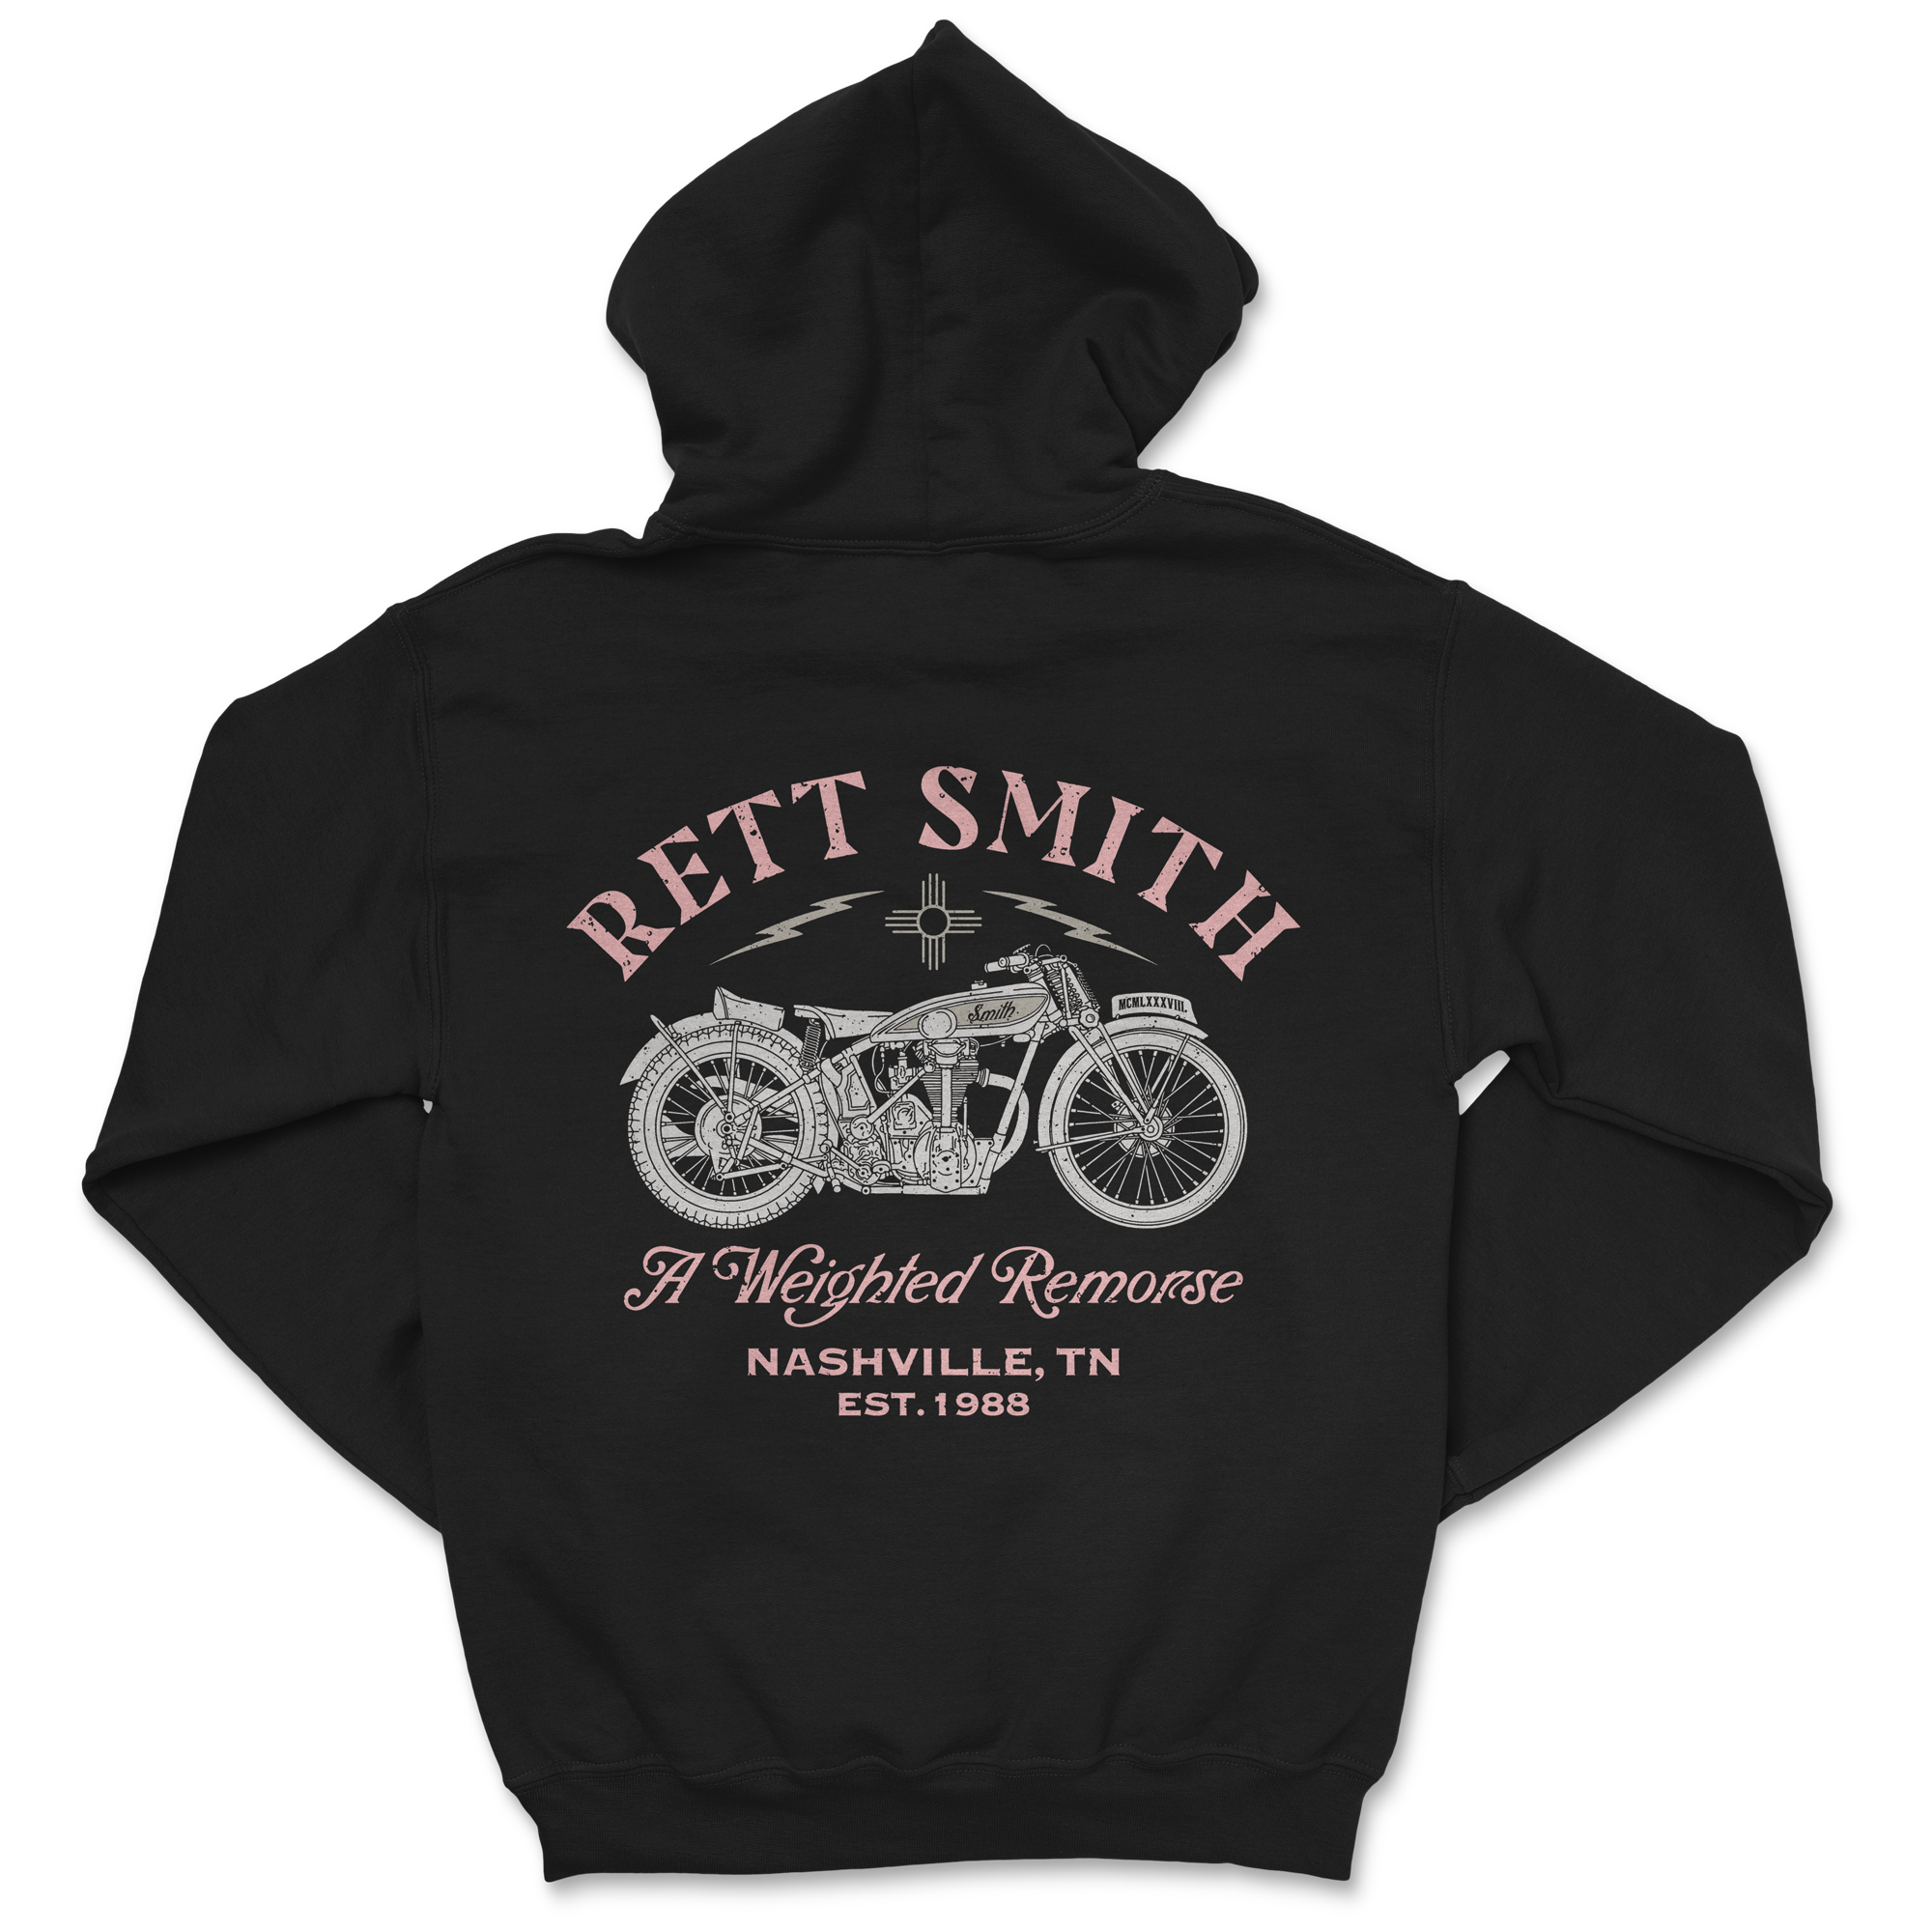 Rett Smith - Motorcycle Hoodie